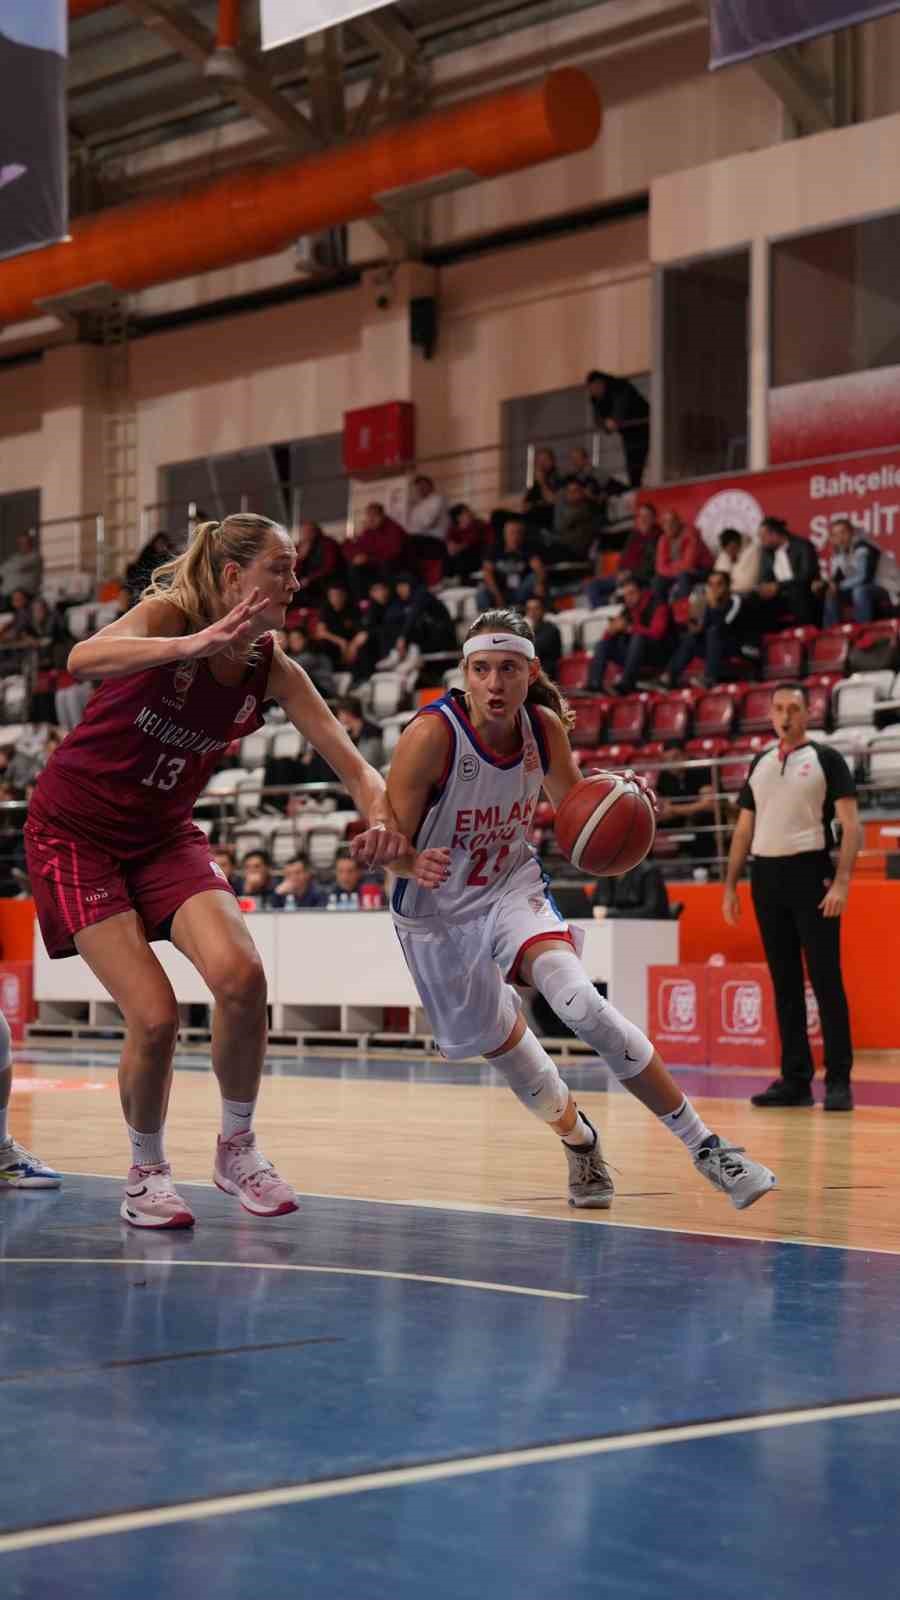 TKBL: Emlak Konut: 63 - Melikgazi Kayseri Basketbol: 80